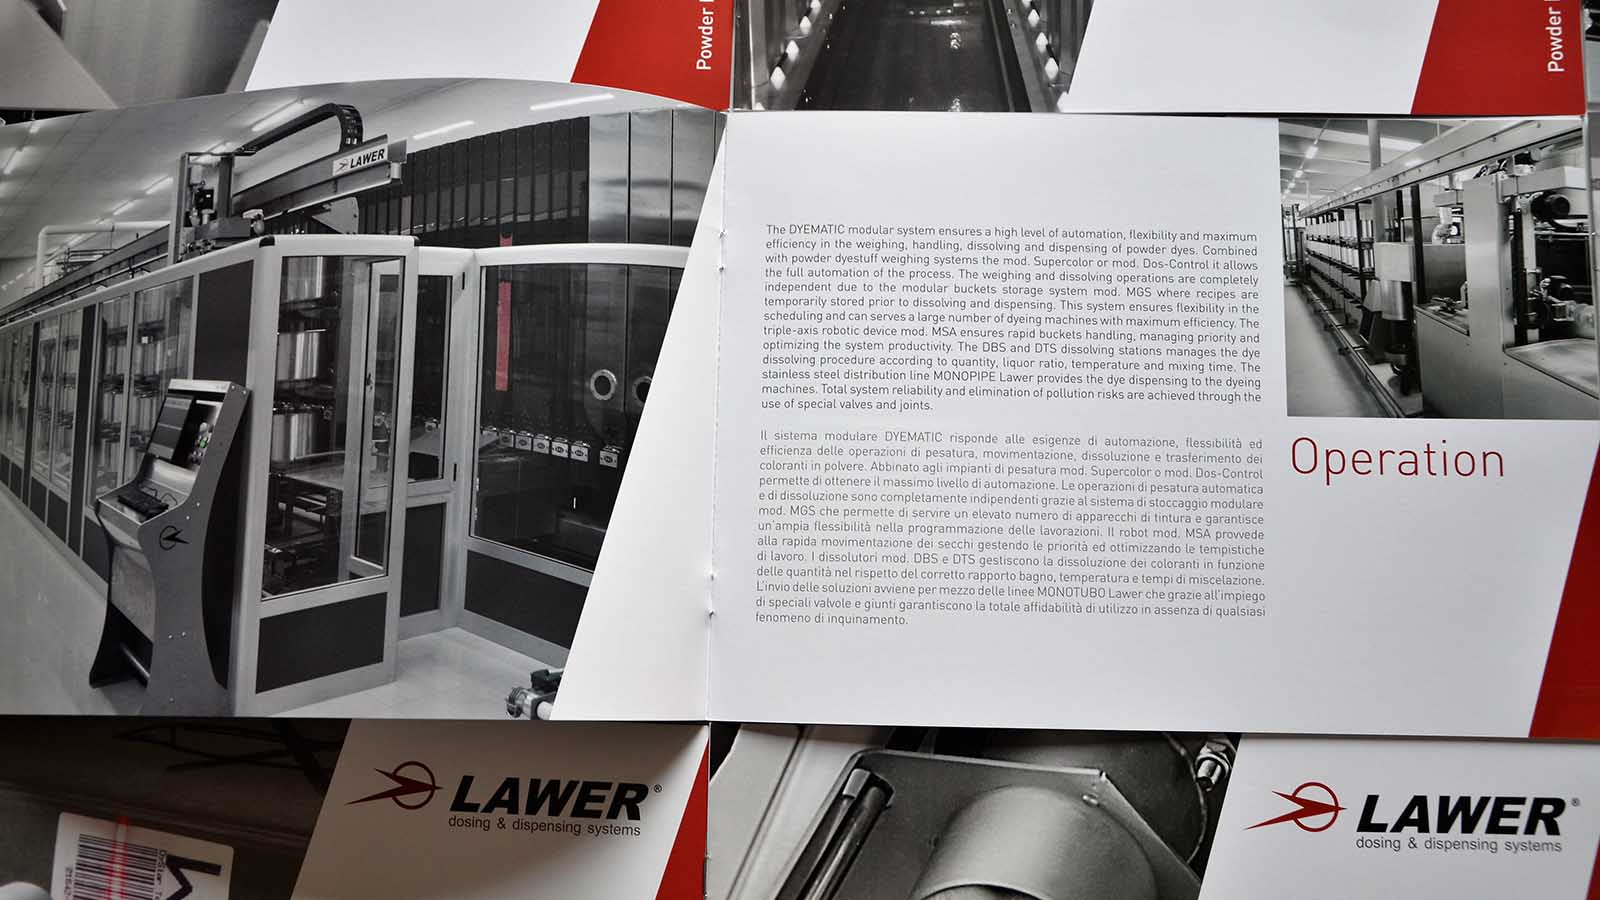 restyling-immagine-coordinata-lawer-2017-interno-brochure